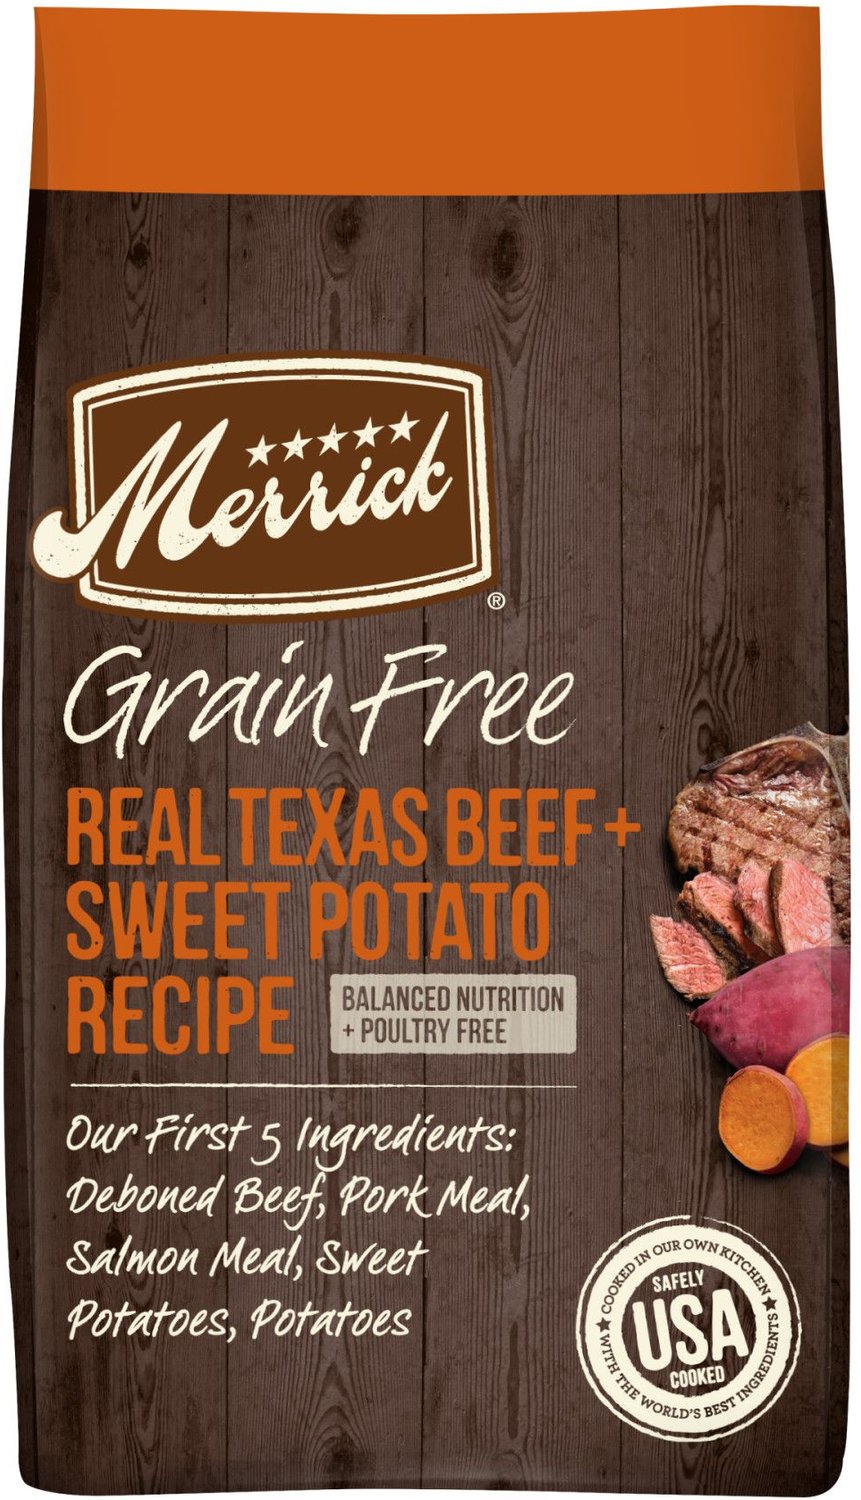 Merrick Real Texas Beef + Sweet Potato Recipe